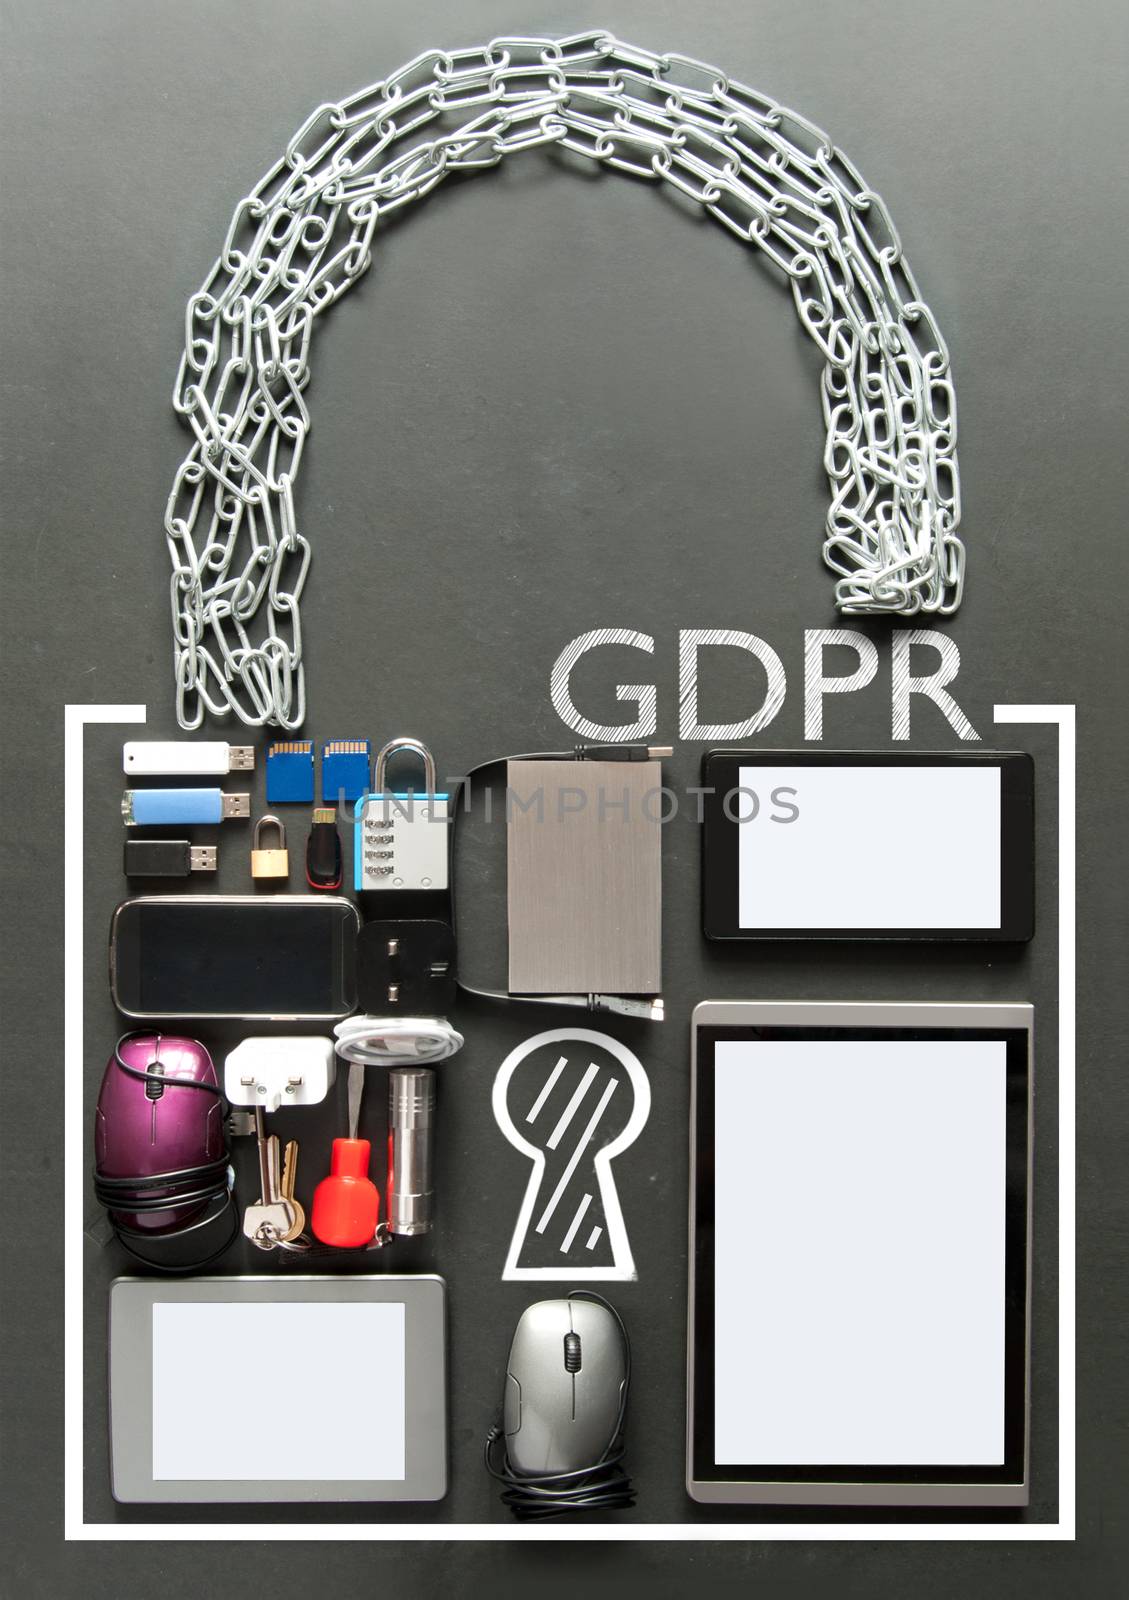 GDPR general data protection regulation padlock concept by unikpix